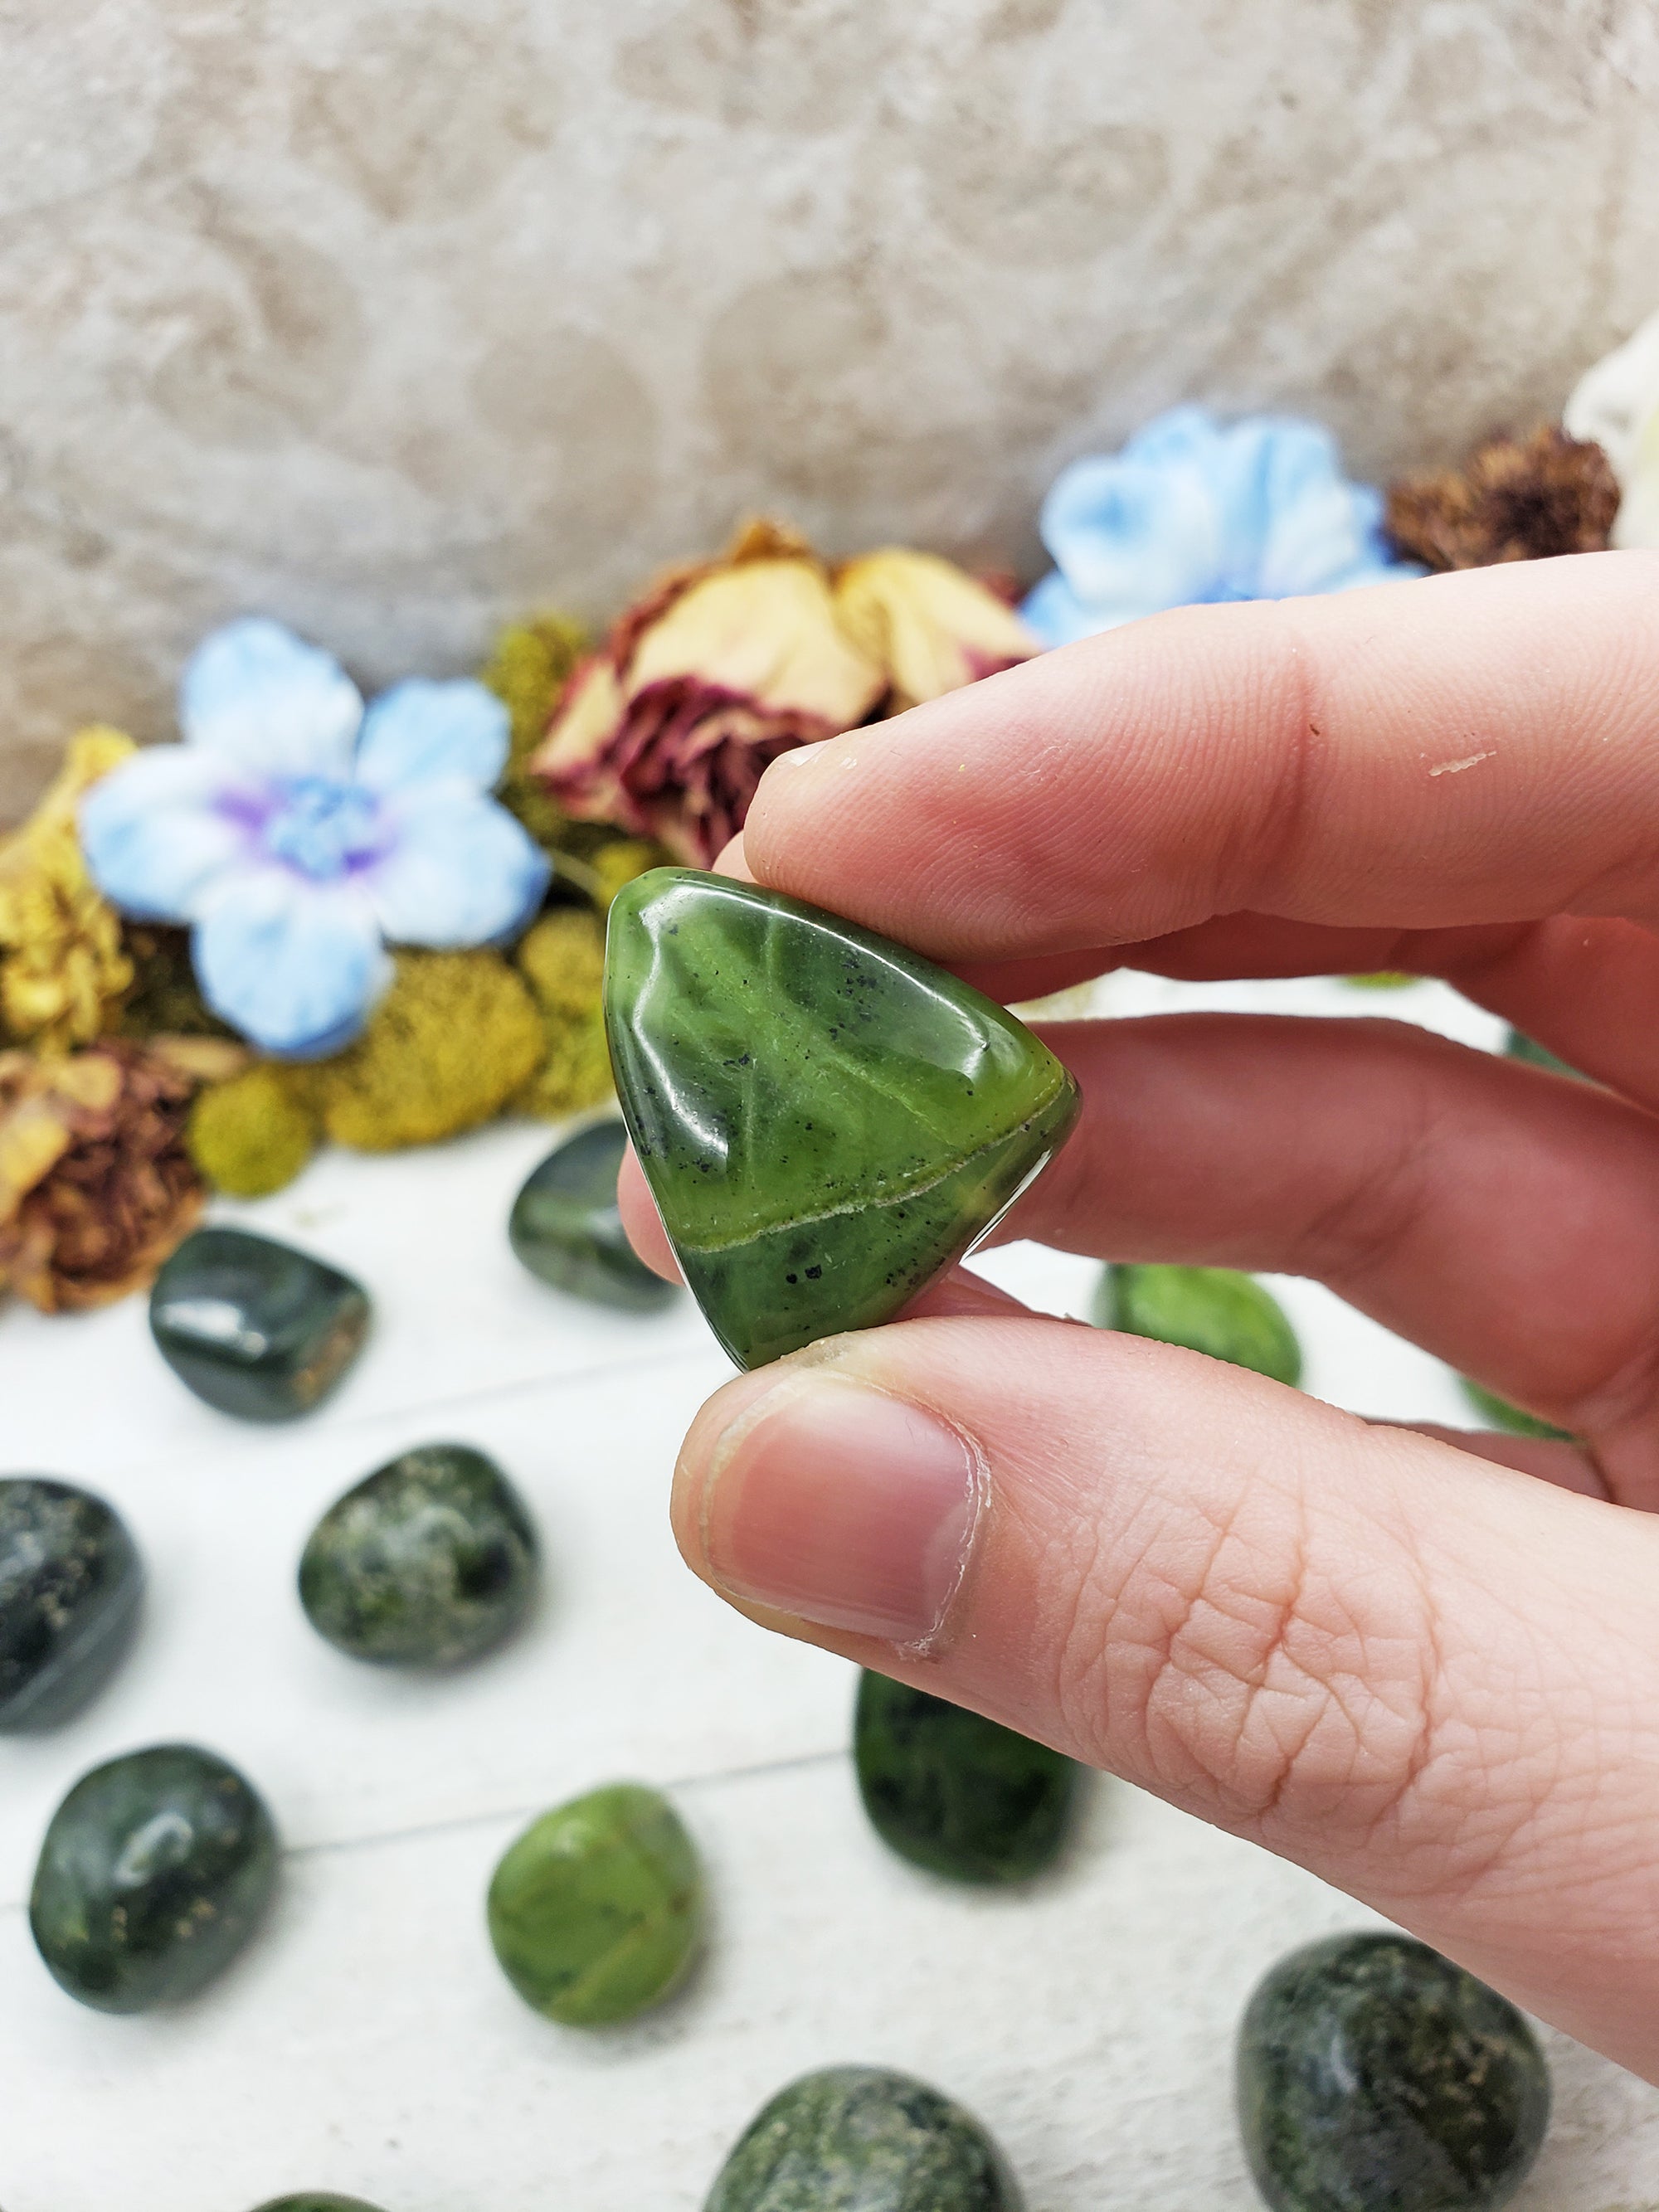 nephrite jade stone between fingers